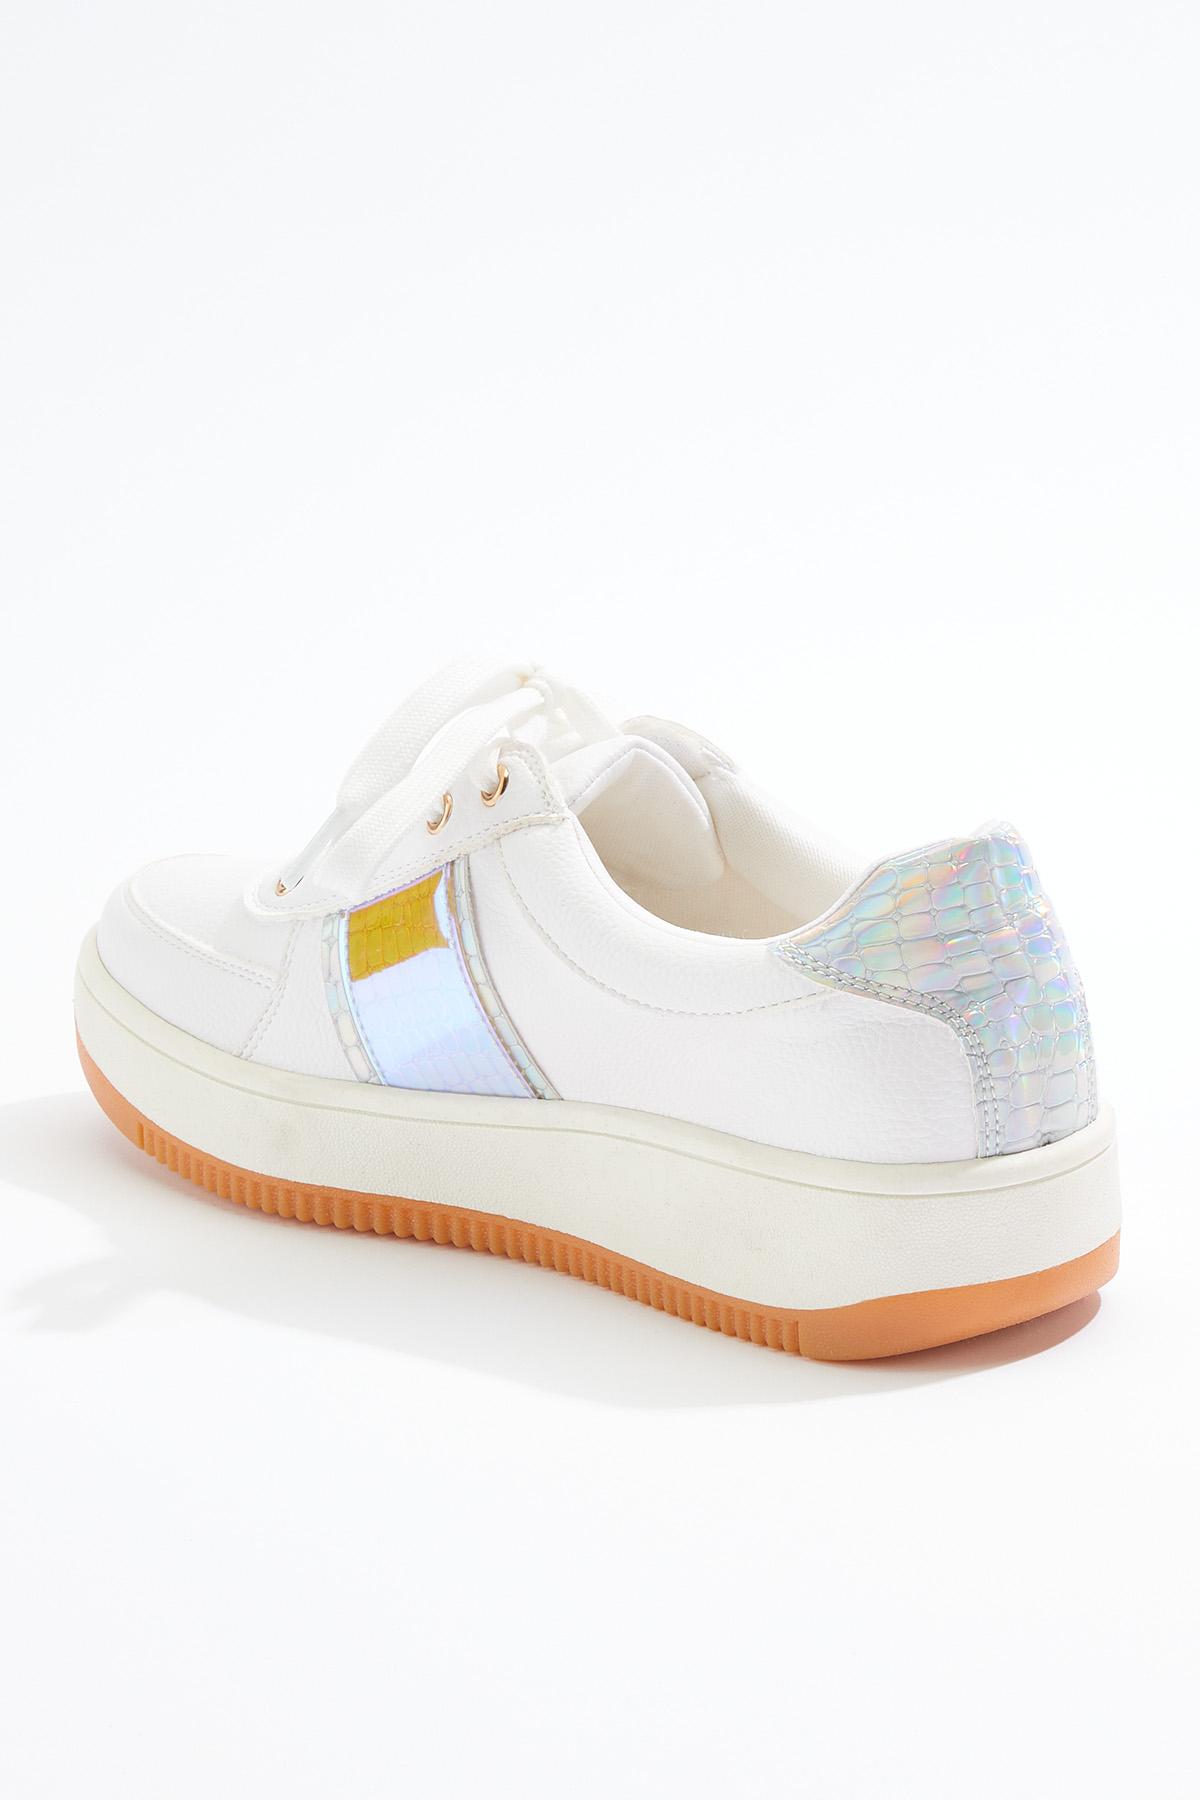 Hologram White Sneakers (Item #44839018)